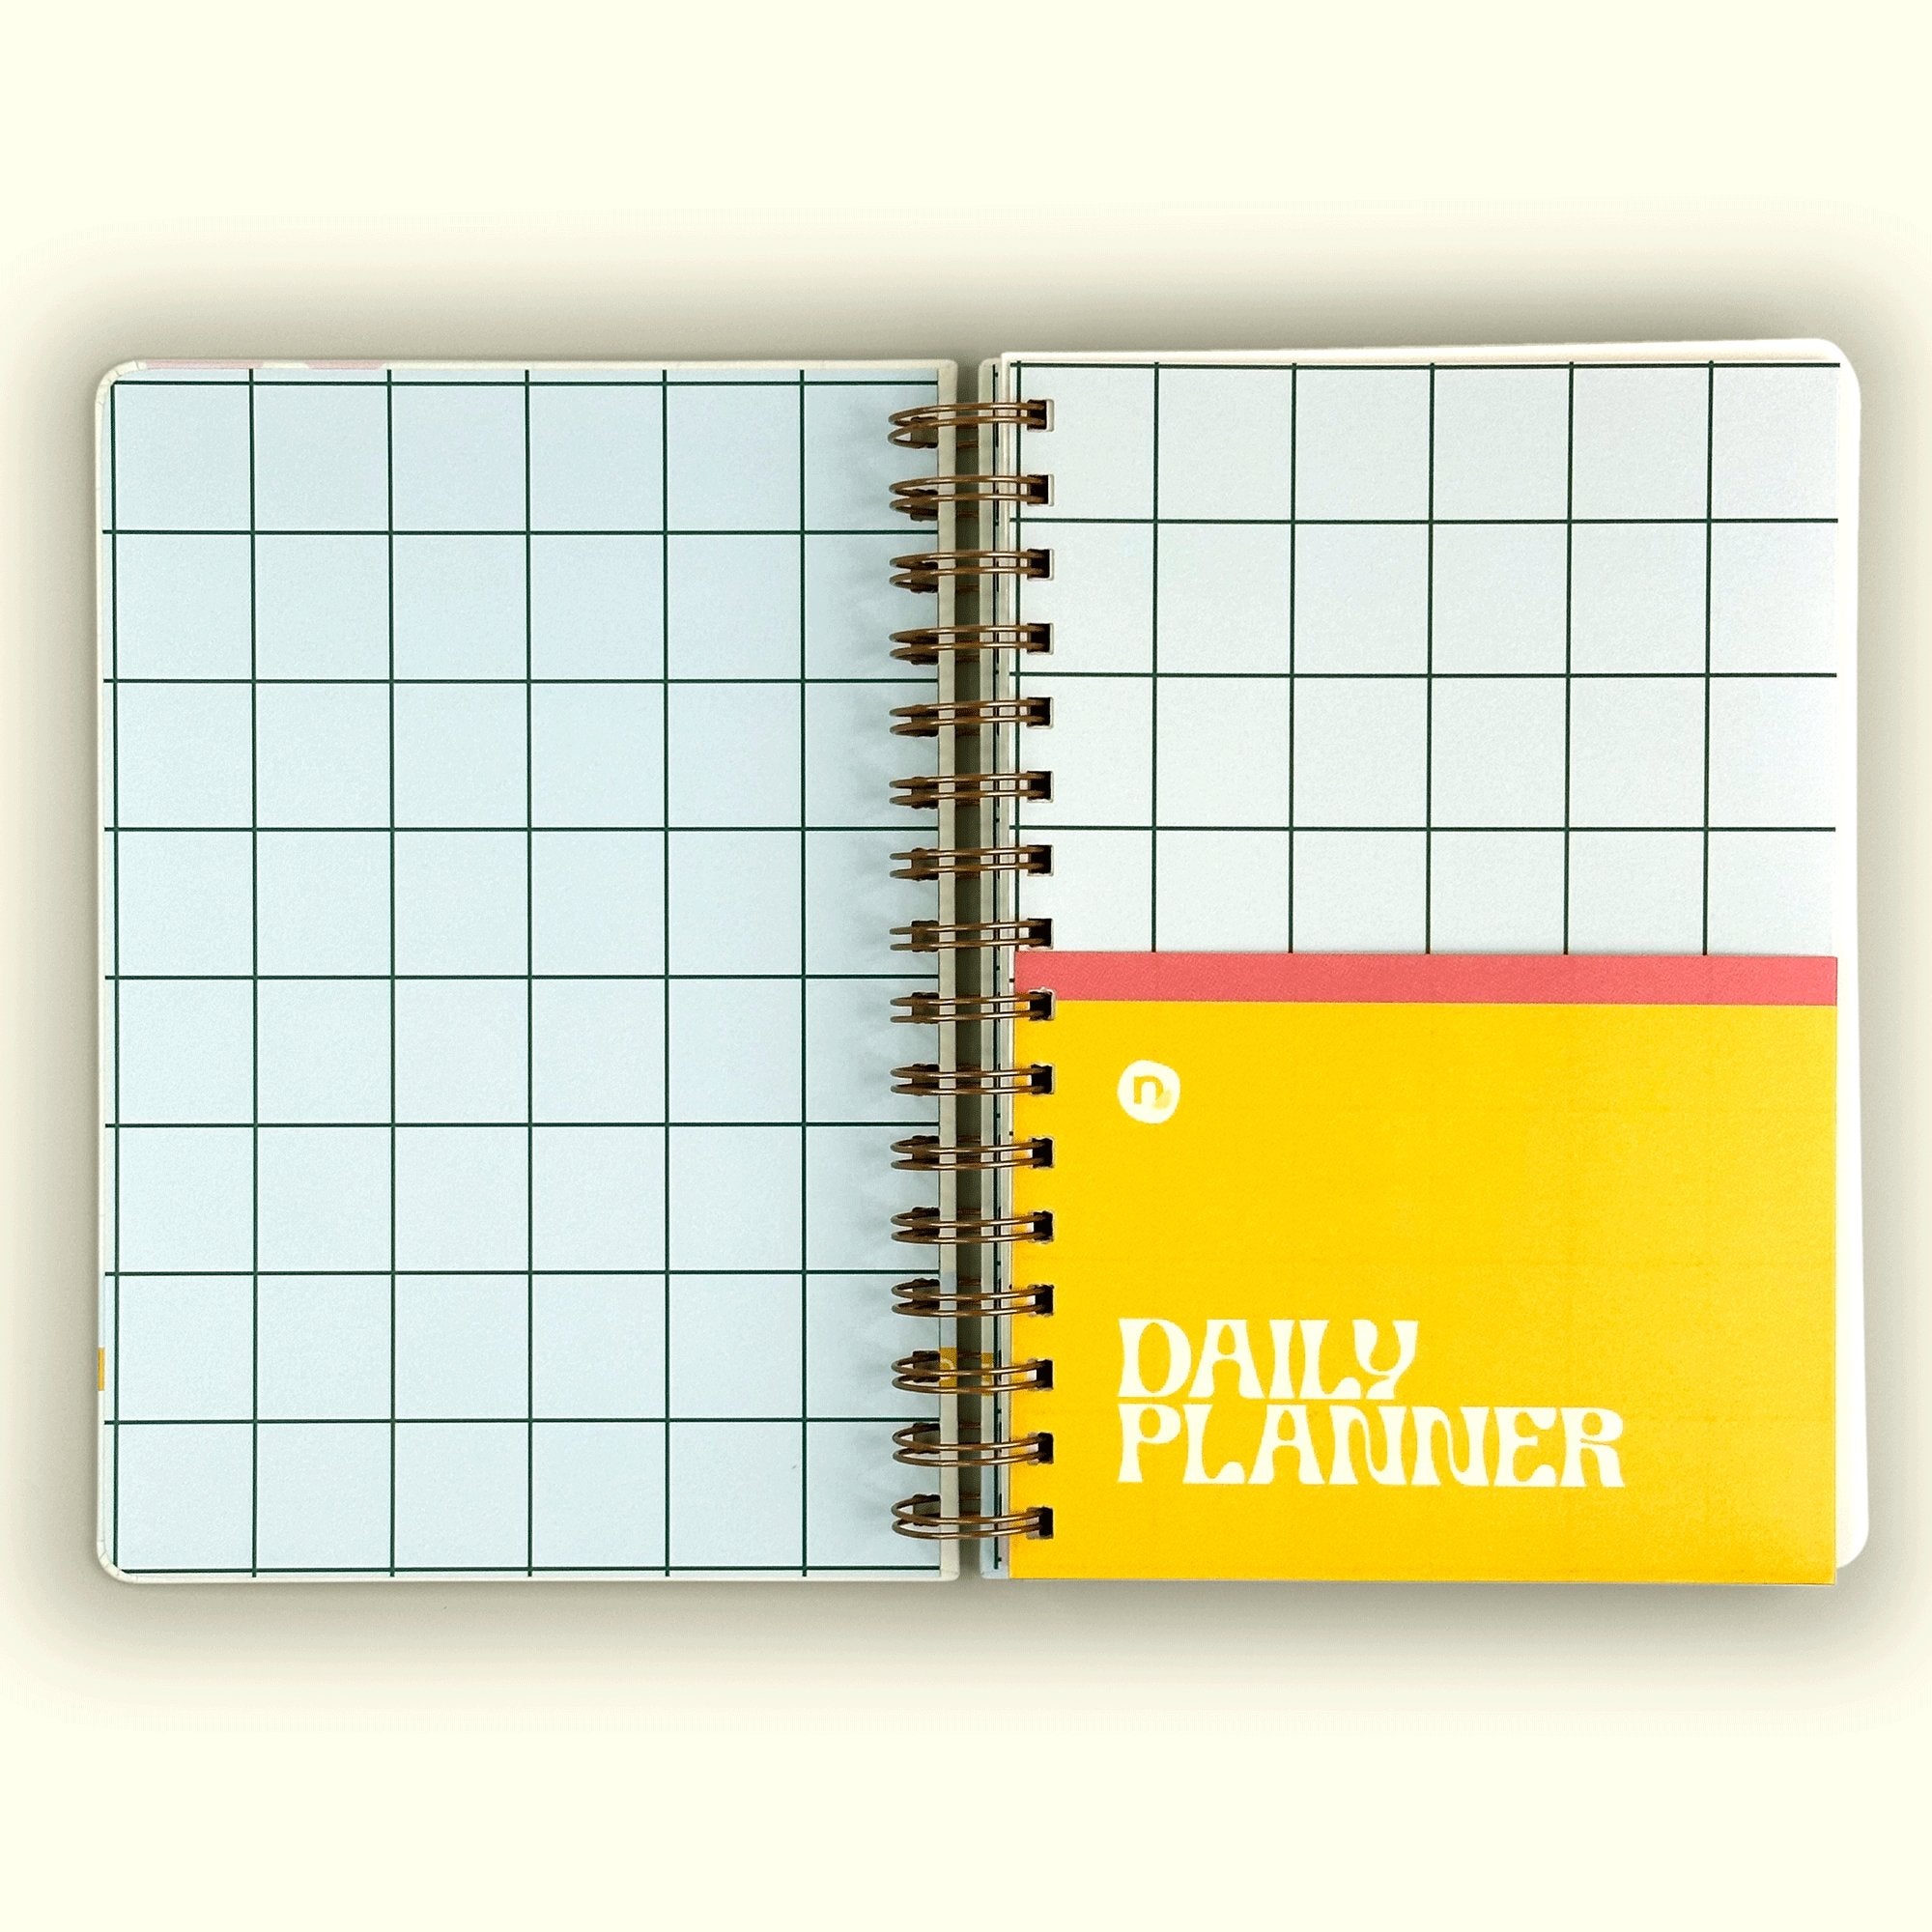 Daily Planner | Doing my best (EU) - Notcoy